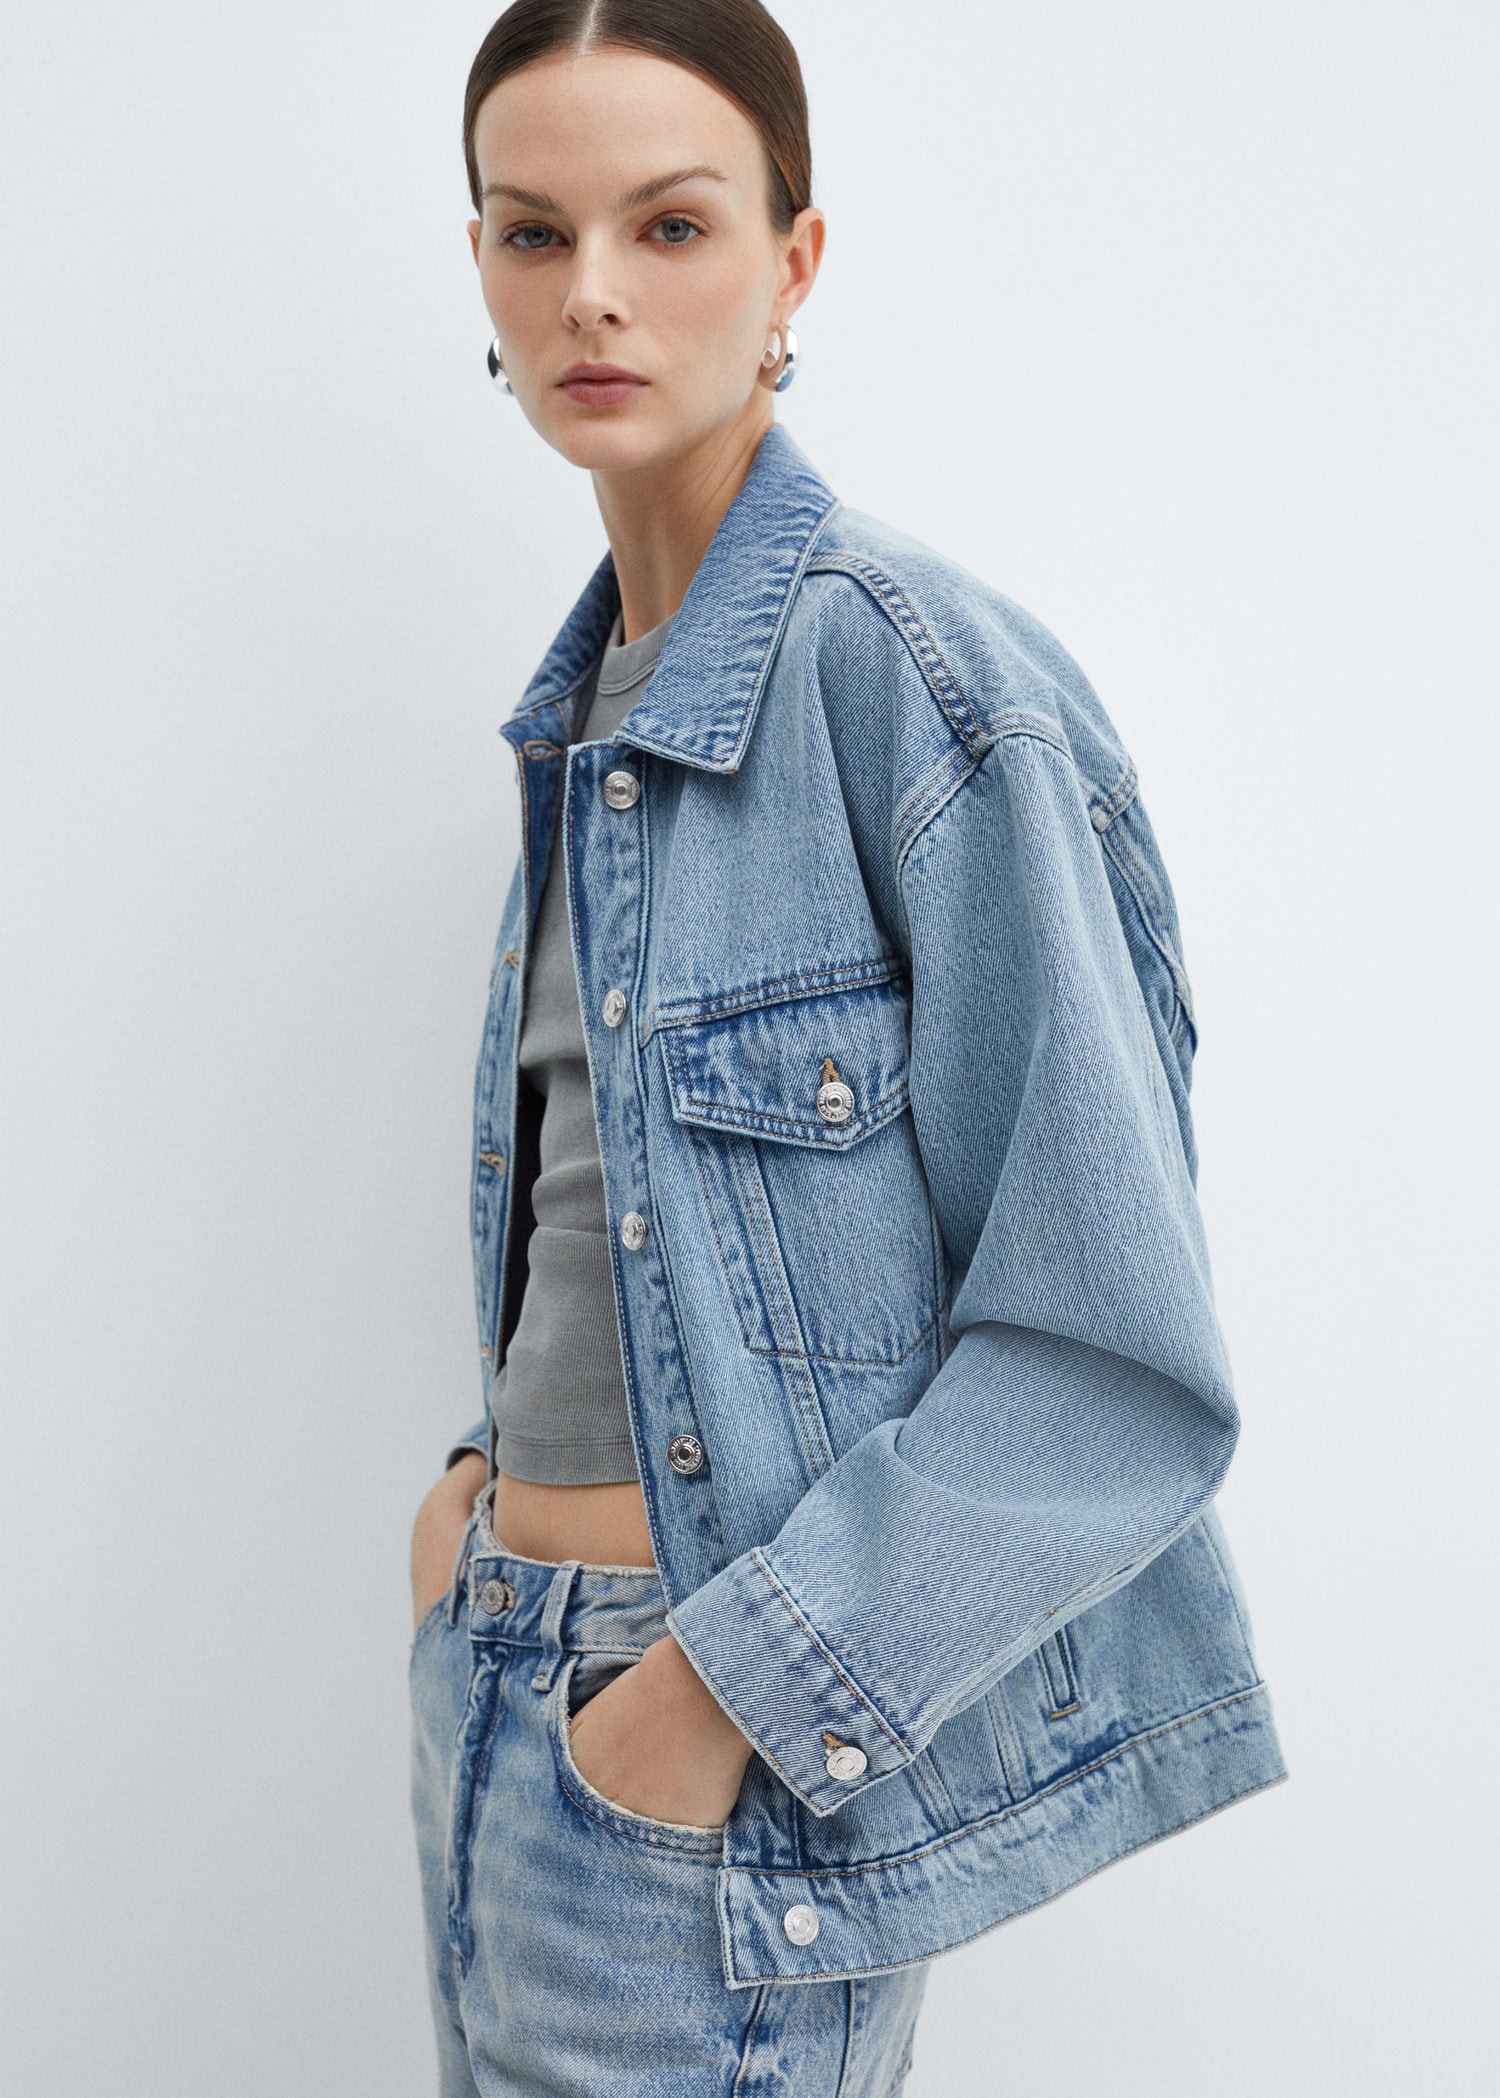 Zara oversized denim jean jacket